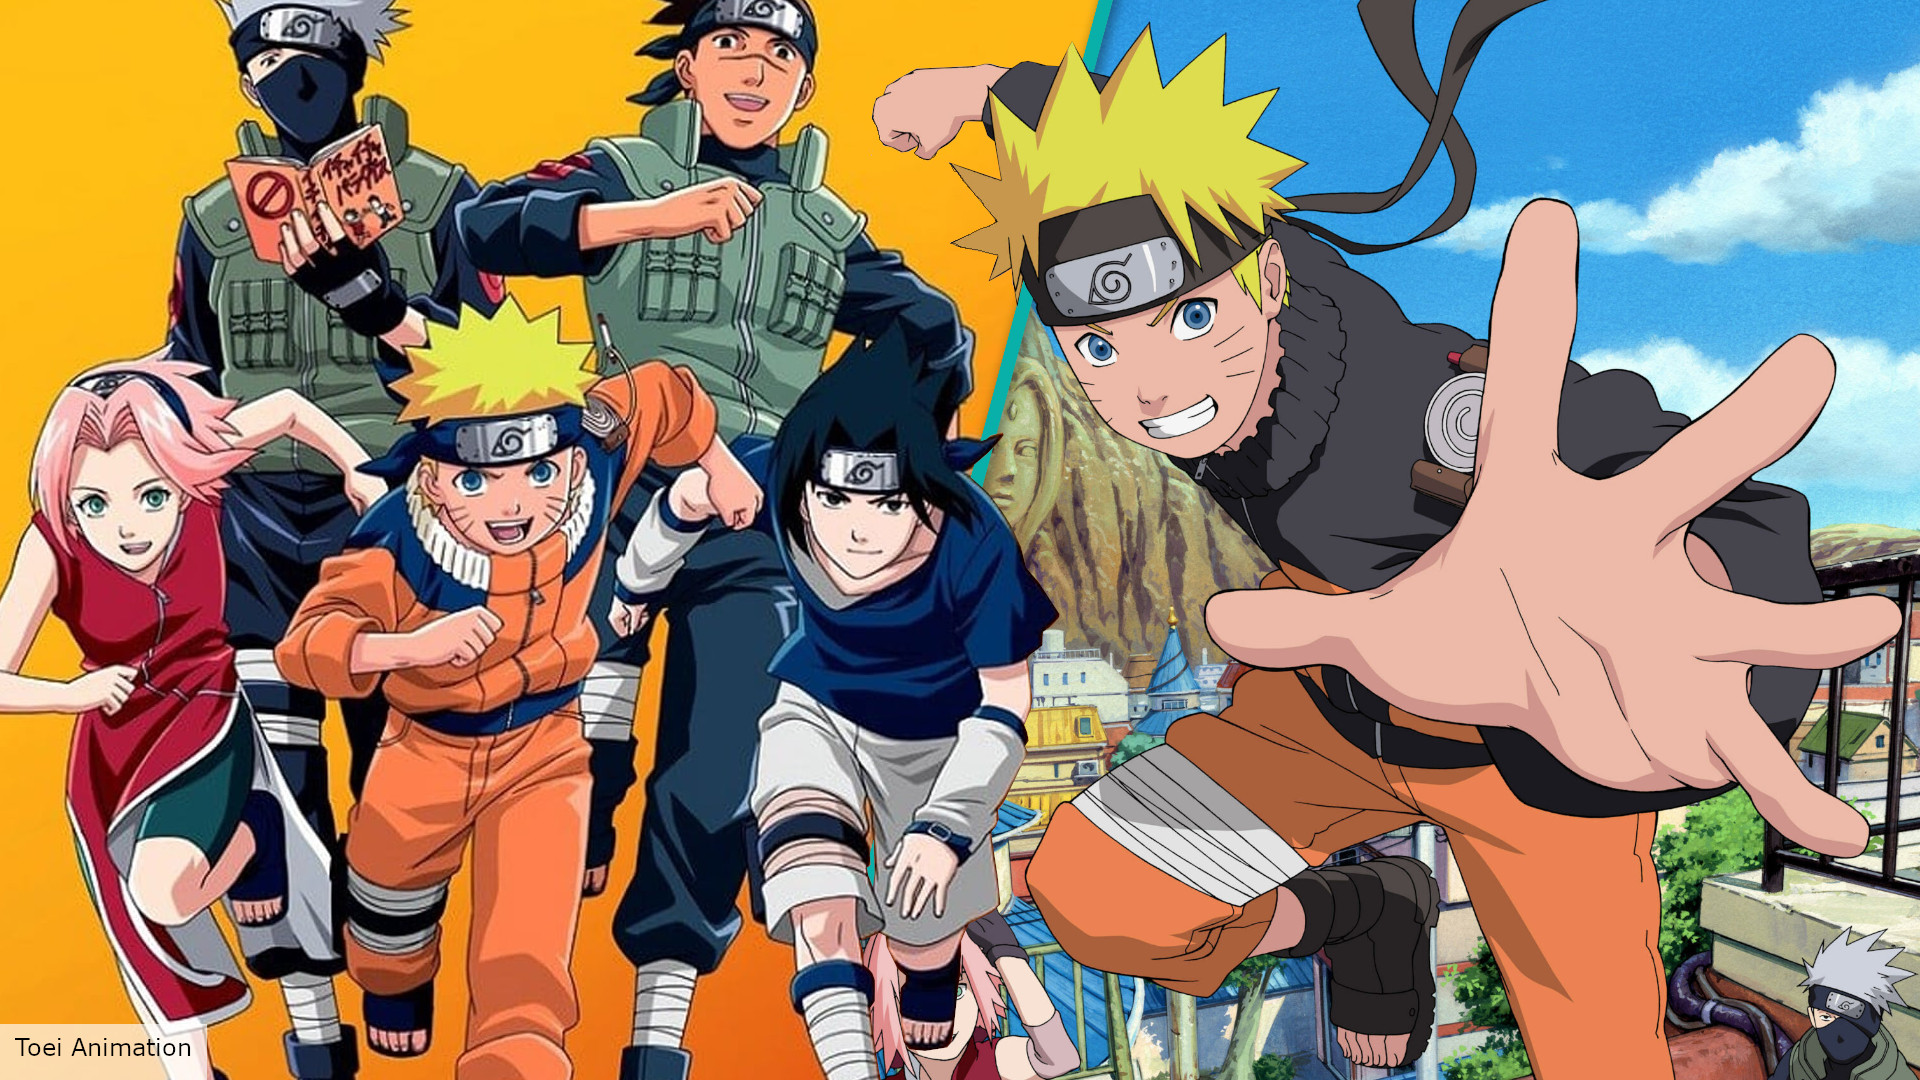 Watch Naruto Shippuden online, Hulu Plus